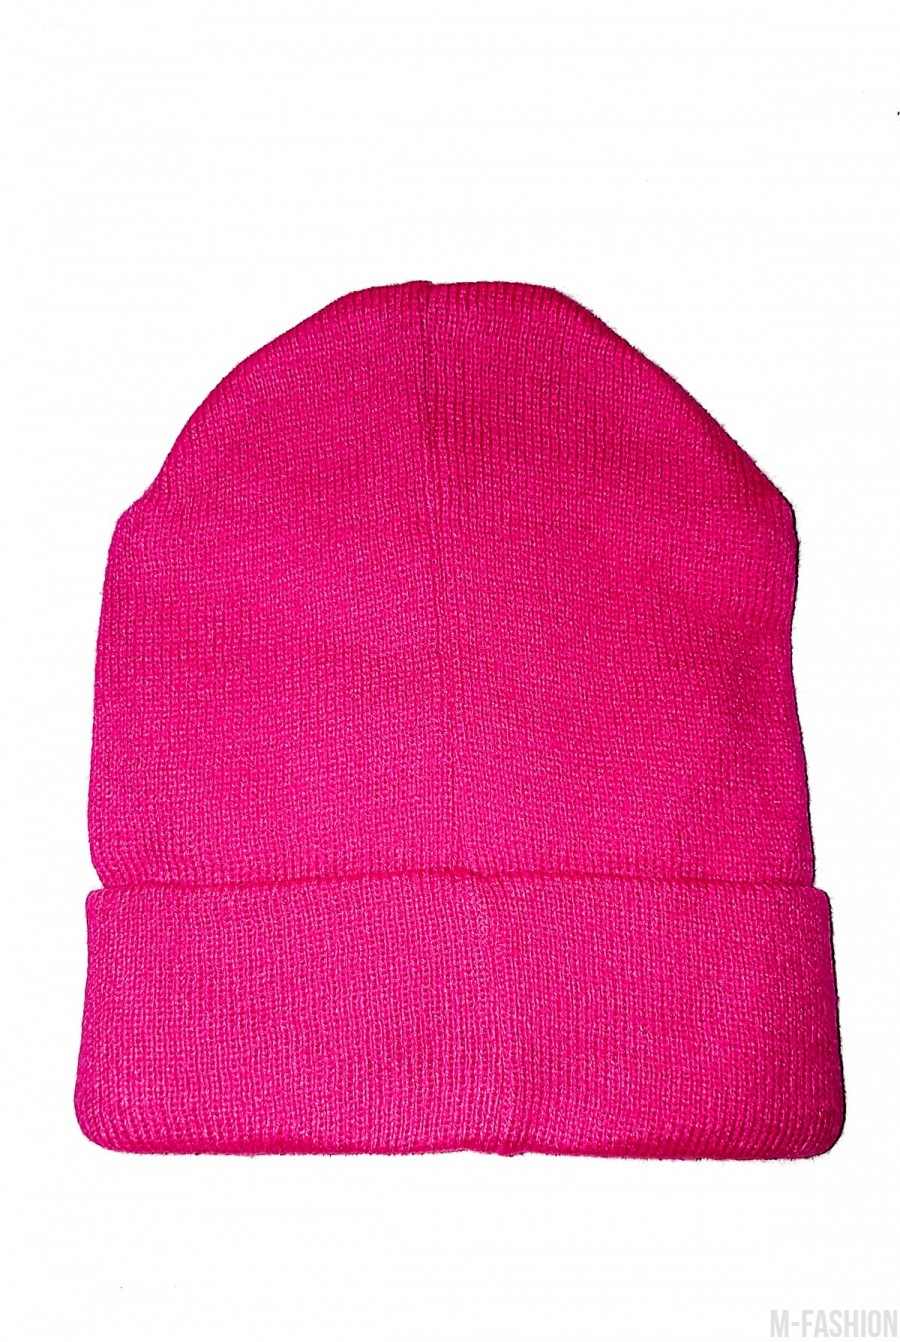 Розовая шапочка с широким отворотом и нашивкой OBEY- Фото 2